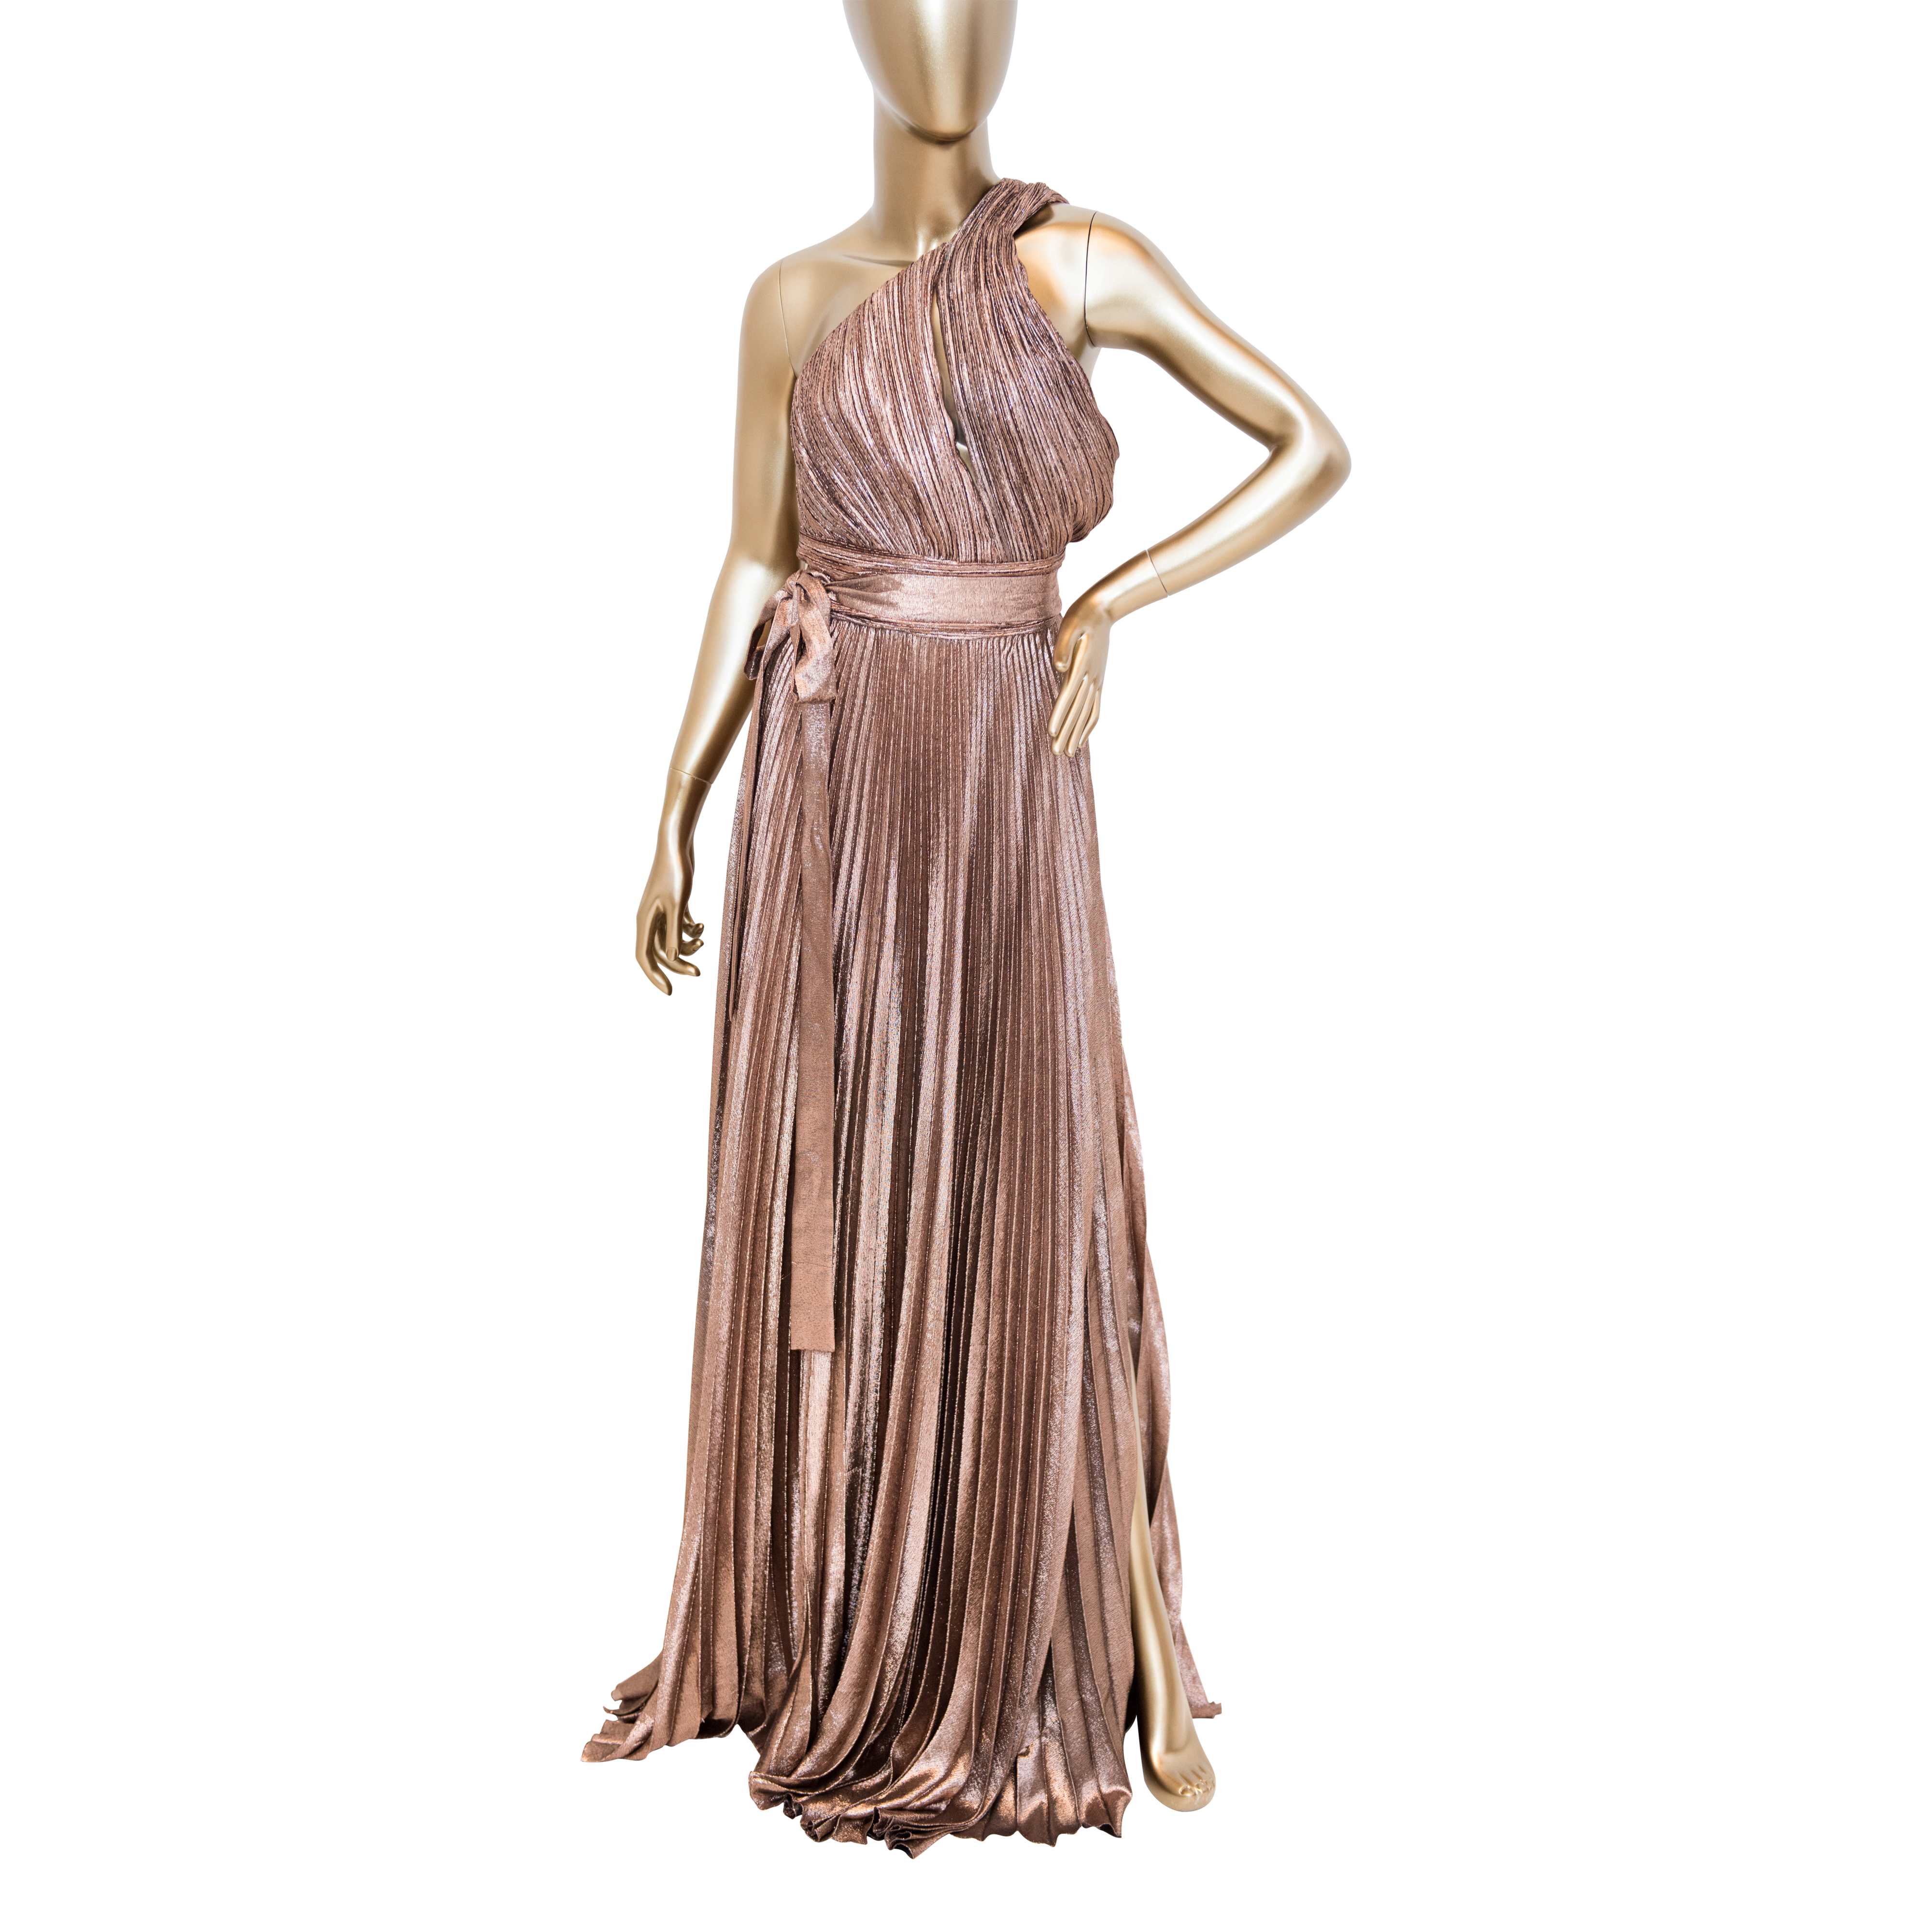 A High-Fashion Gold Wedding Dress from Elie Saab | Gold wedding dress,  Bridal gowns, Gold wedding gowns